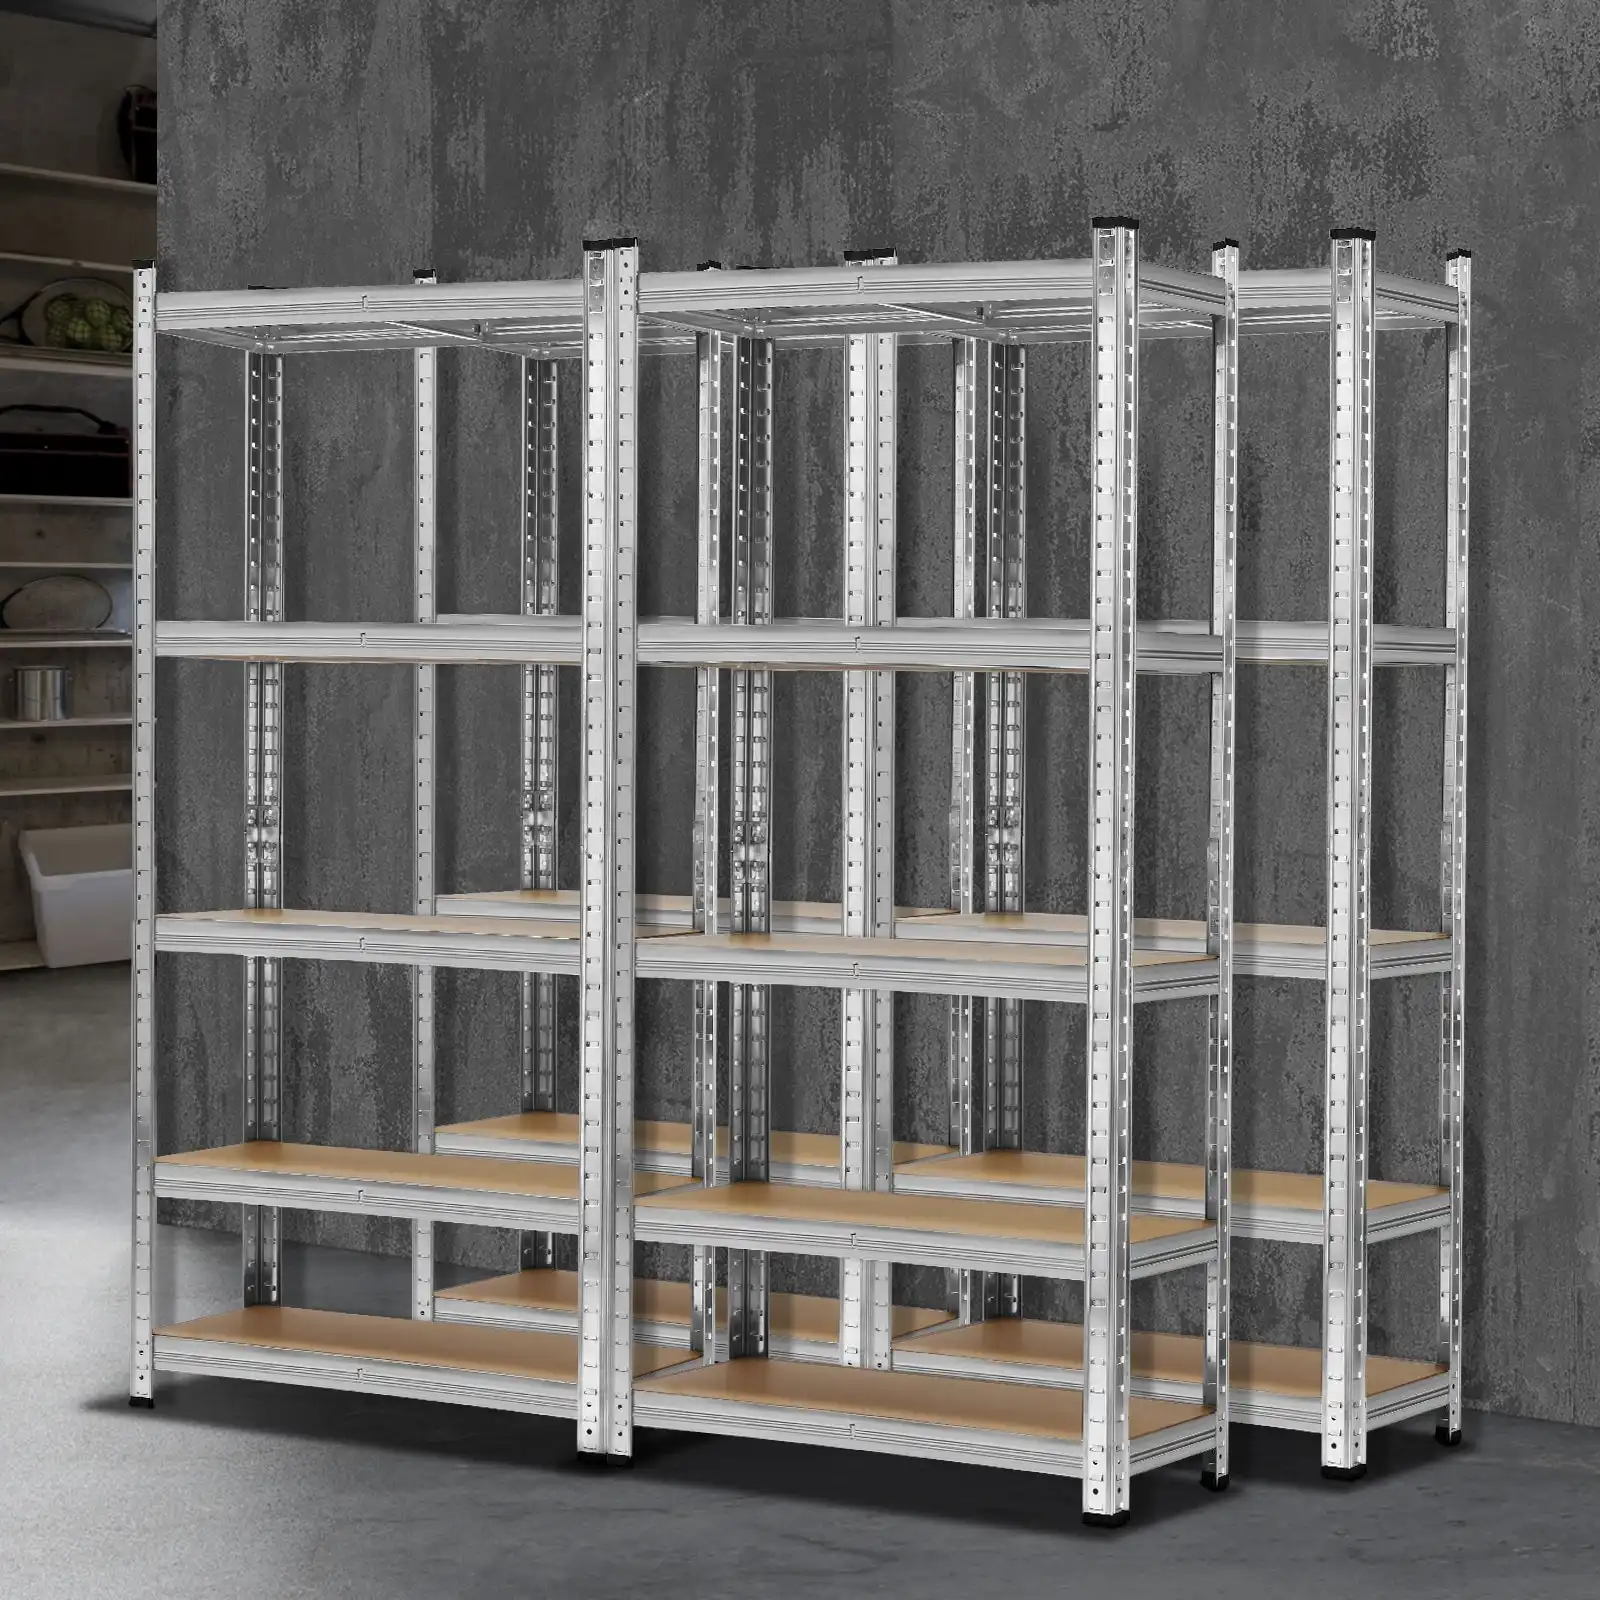 Sharptoo 4x1.5m Garage Shelving Shelves Warehouse Racking Storage Rack Pallet